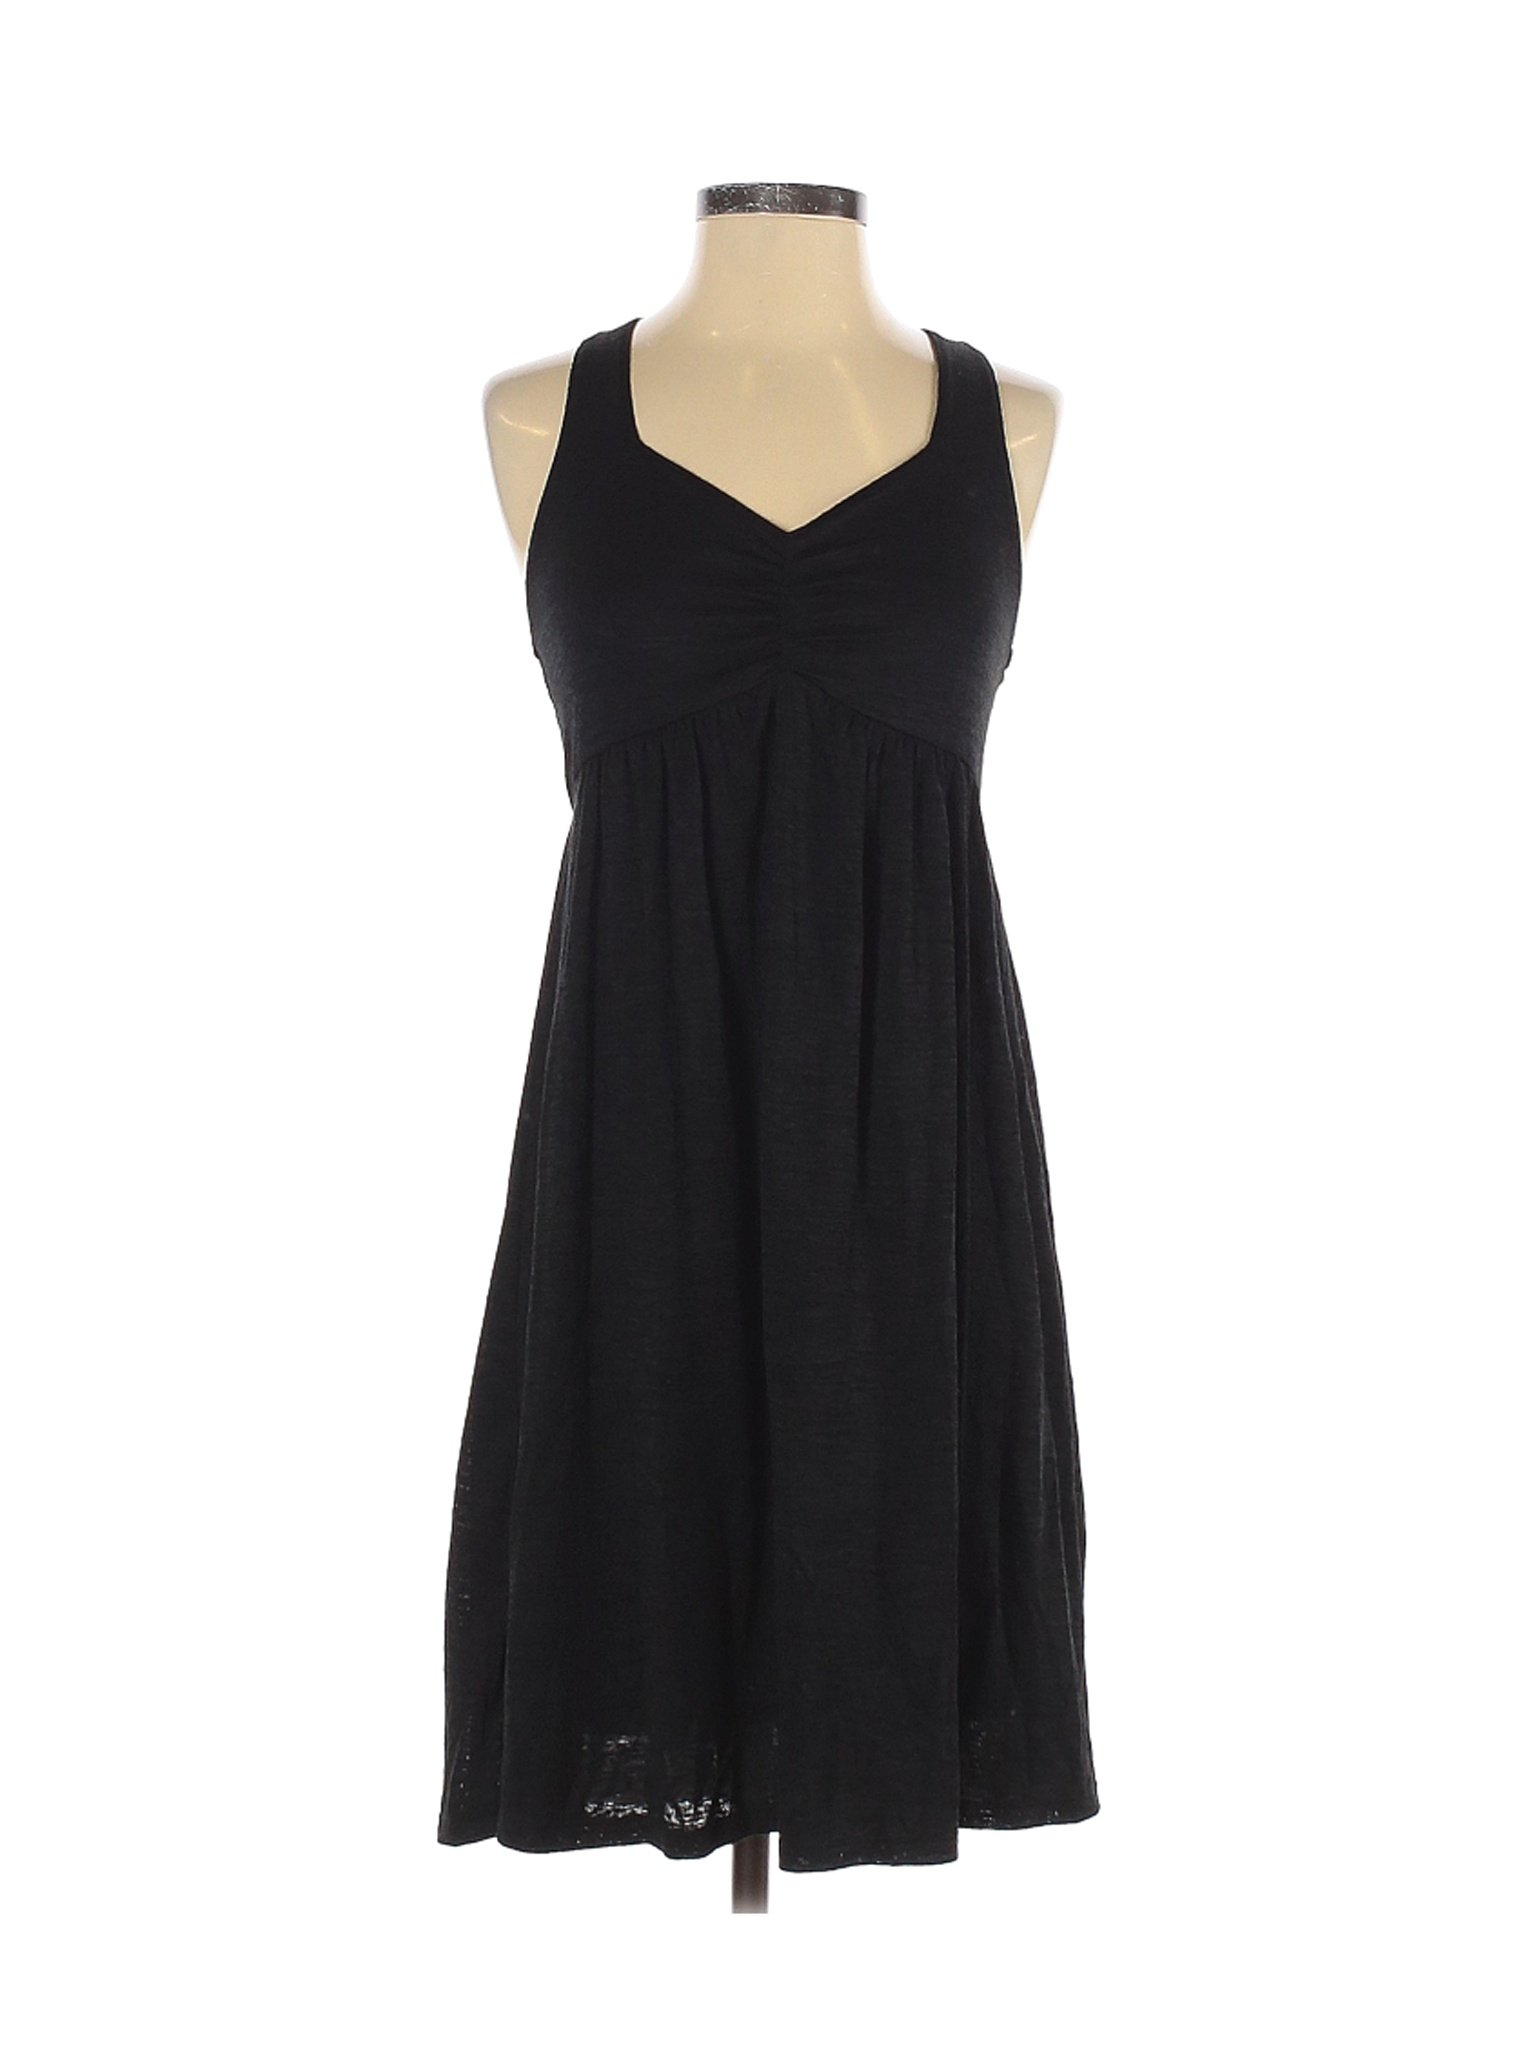 Universal Thread Women Black Casual Dress S | eBay